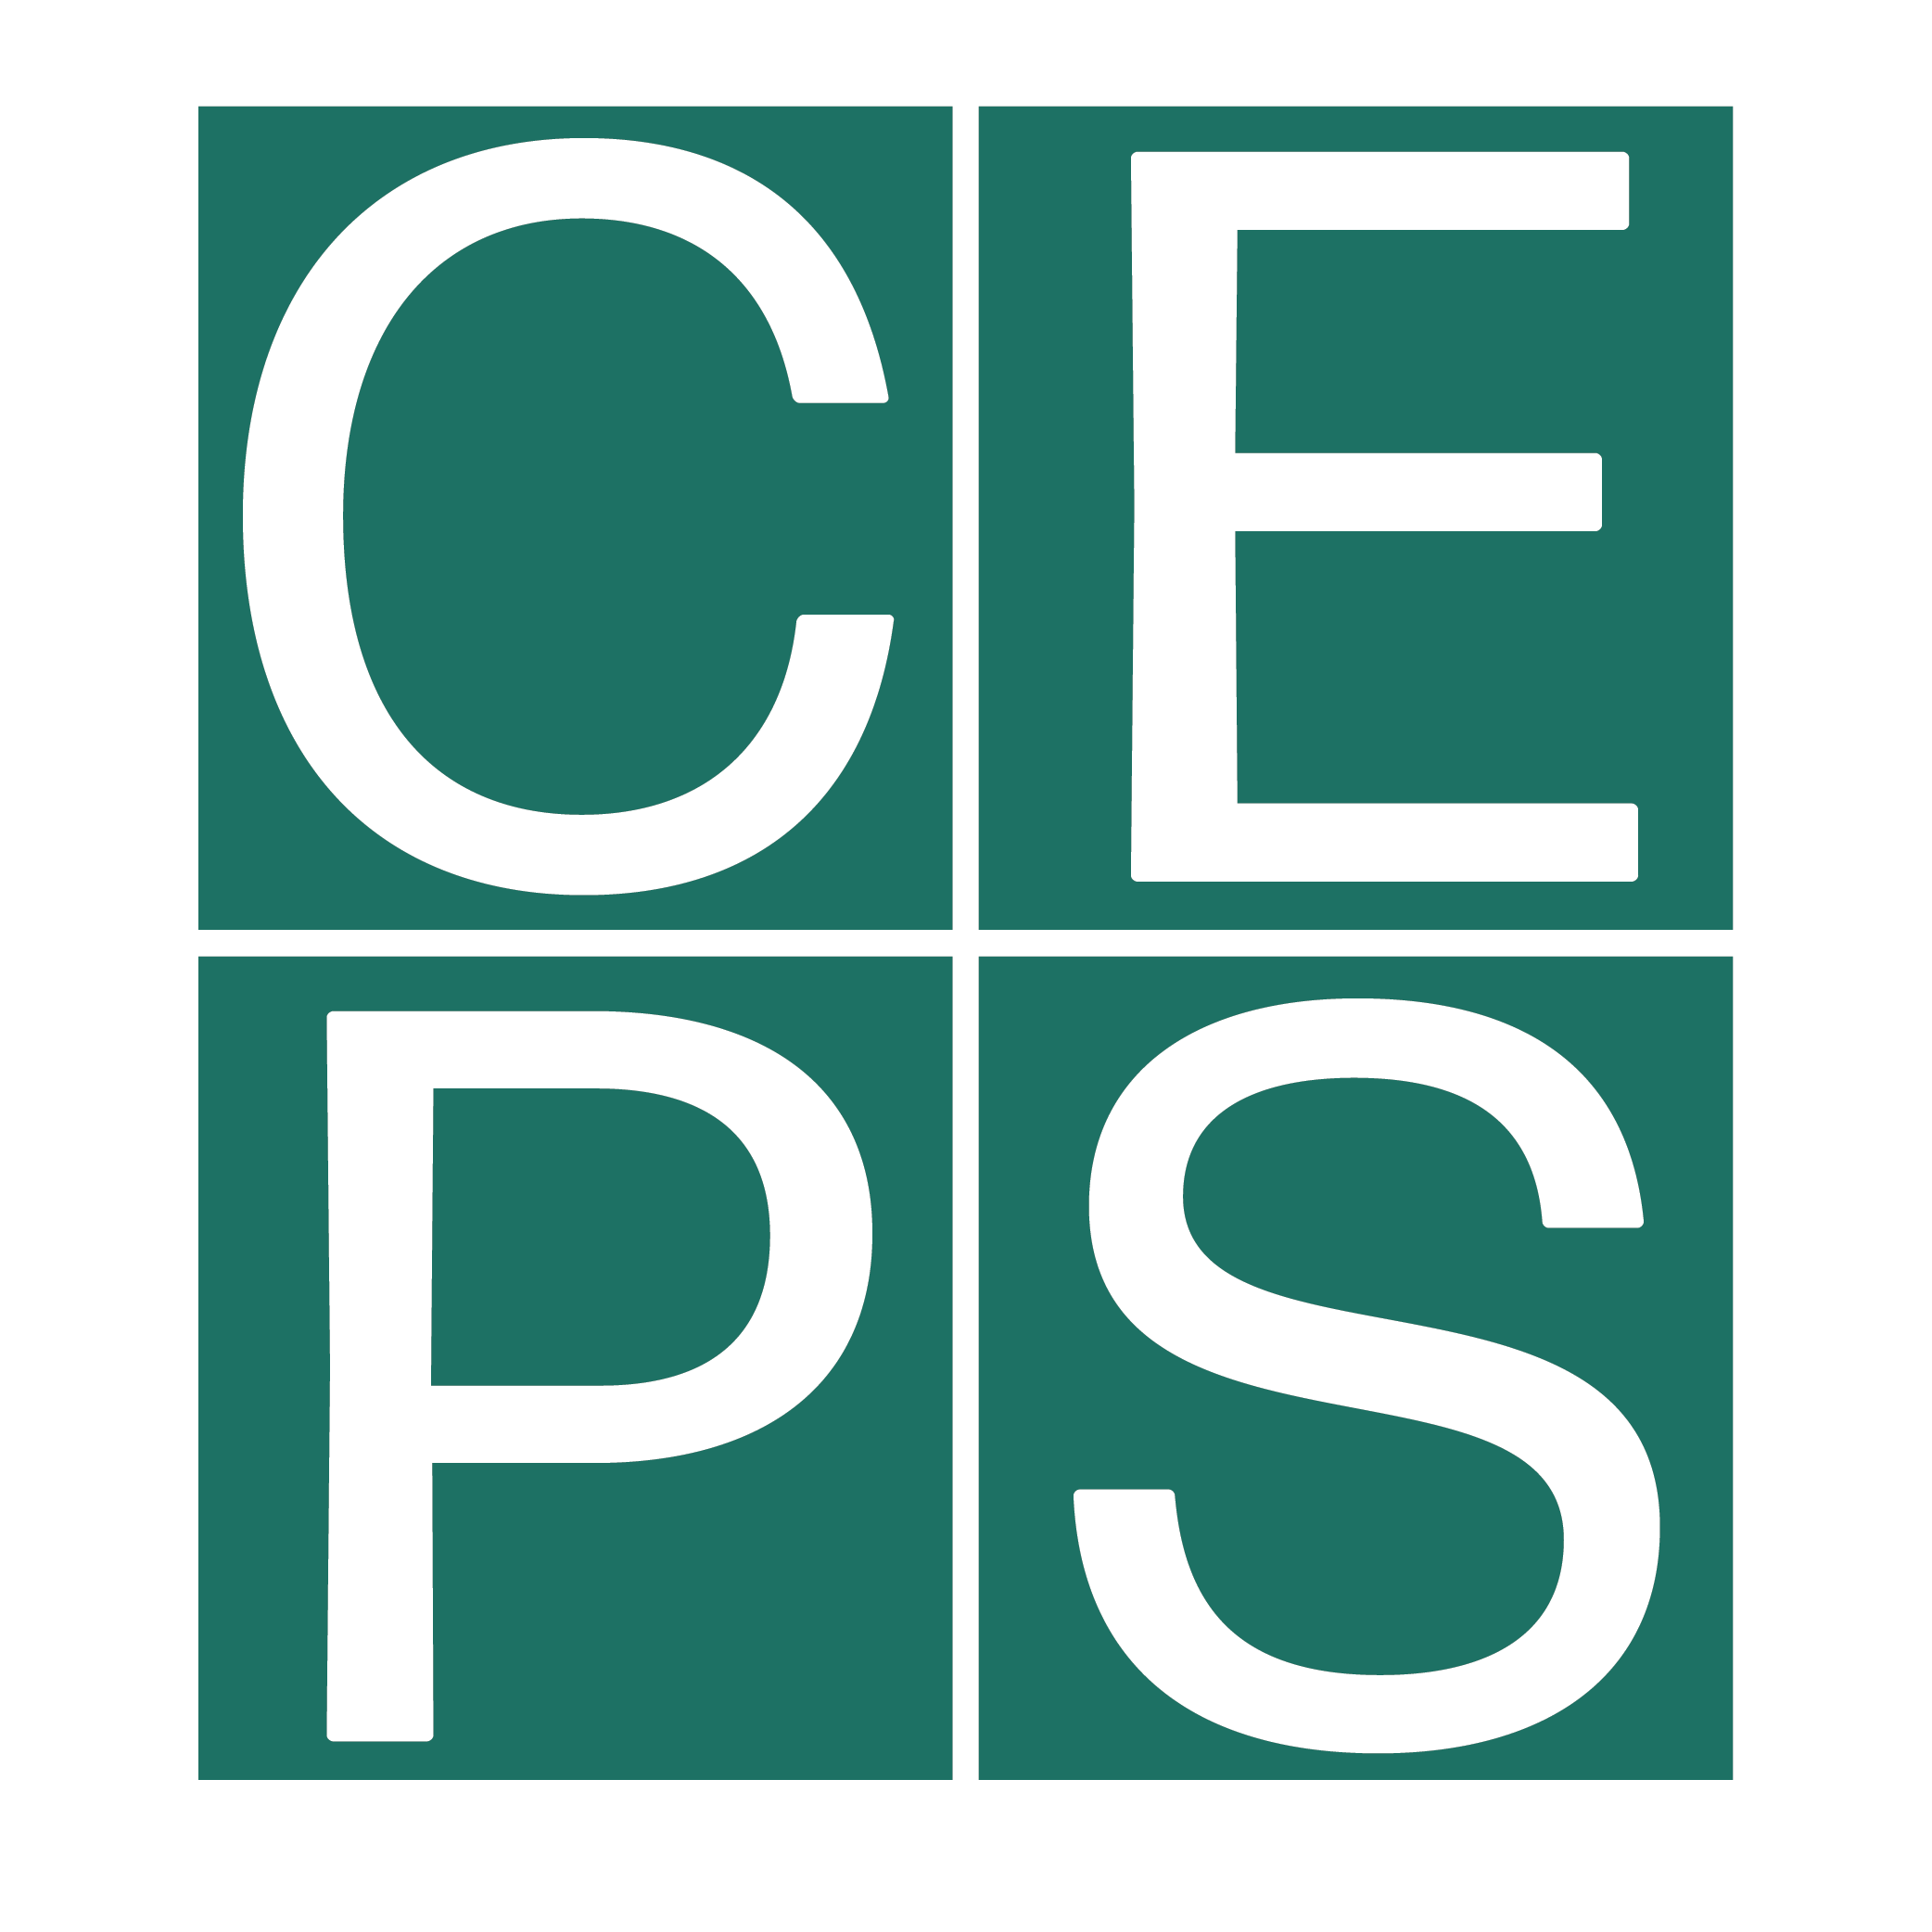 Center for European Policy Studies (CEPS) logo